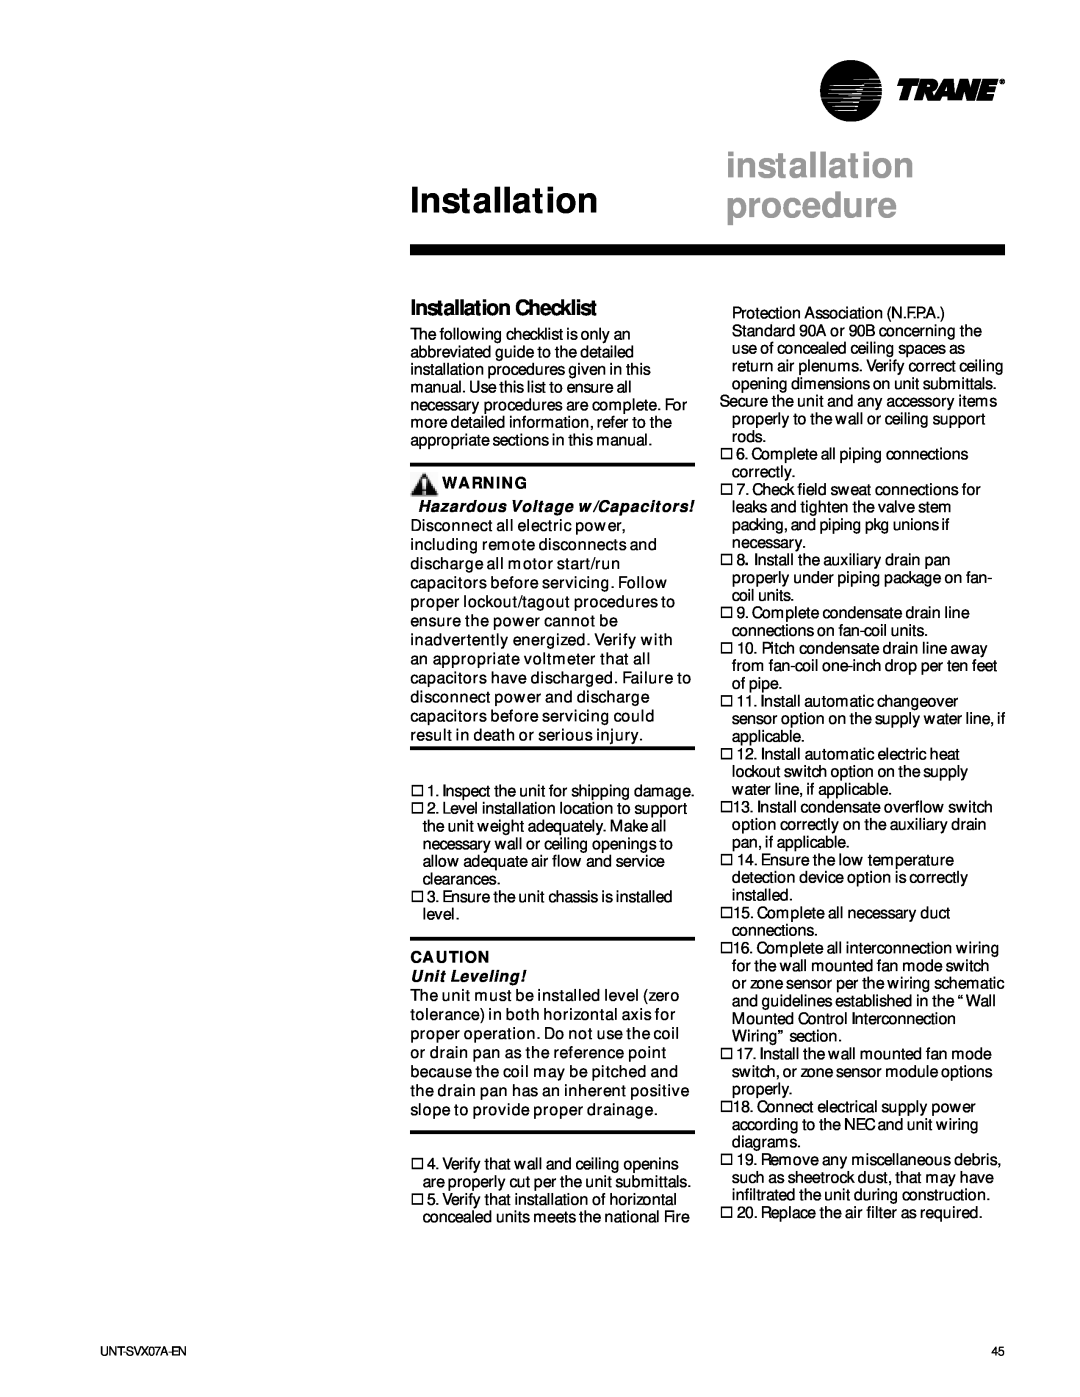 Trane UniTrane Fan-Coil & Force Flo Air Conditioners manual Installation Checklist, installation, Installation procedure 